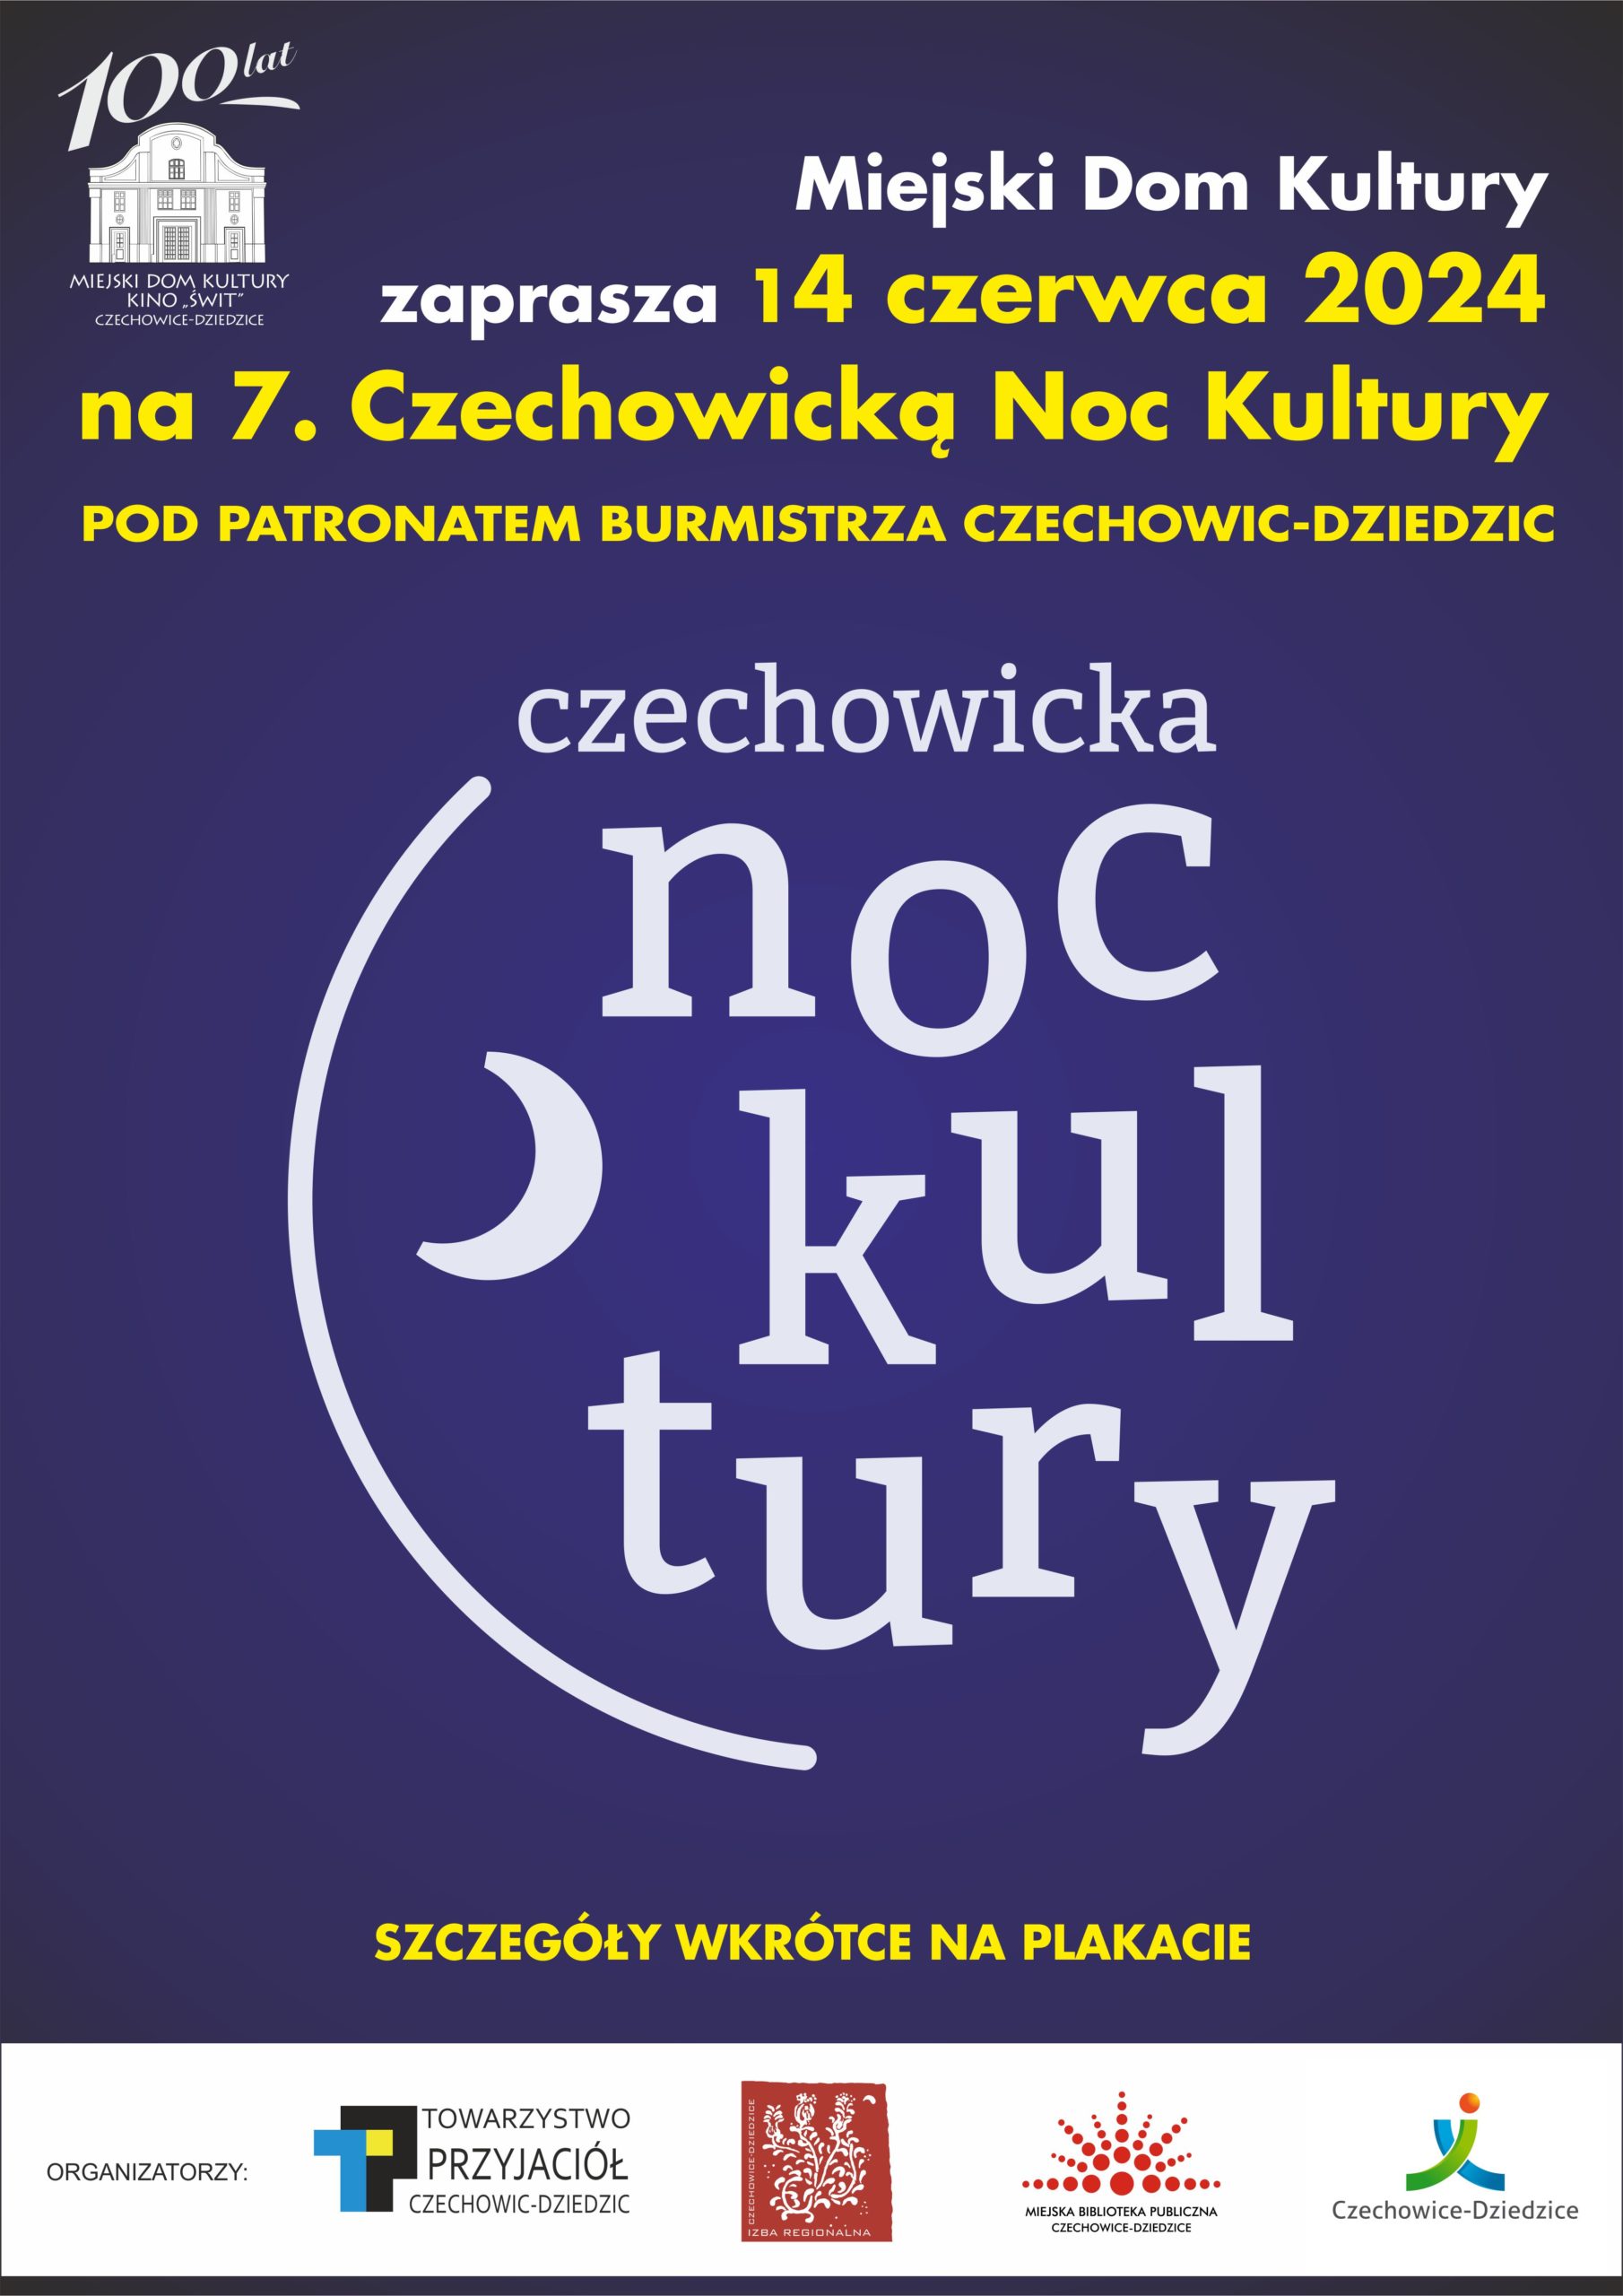 CZECHOWICKA NOC KULTURY